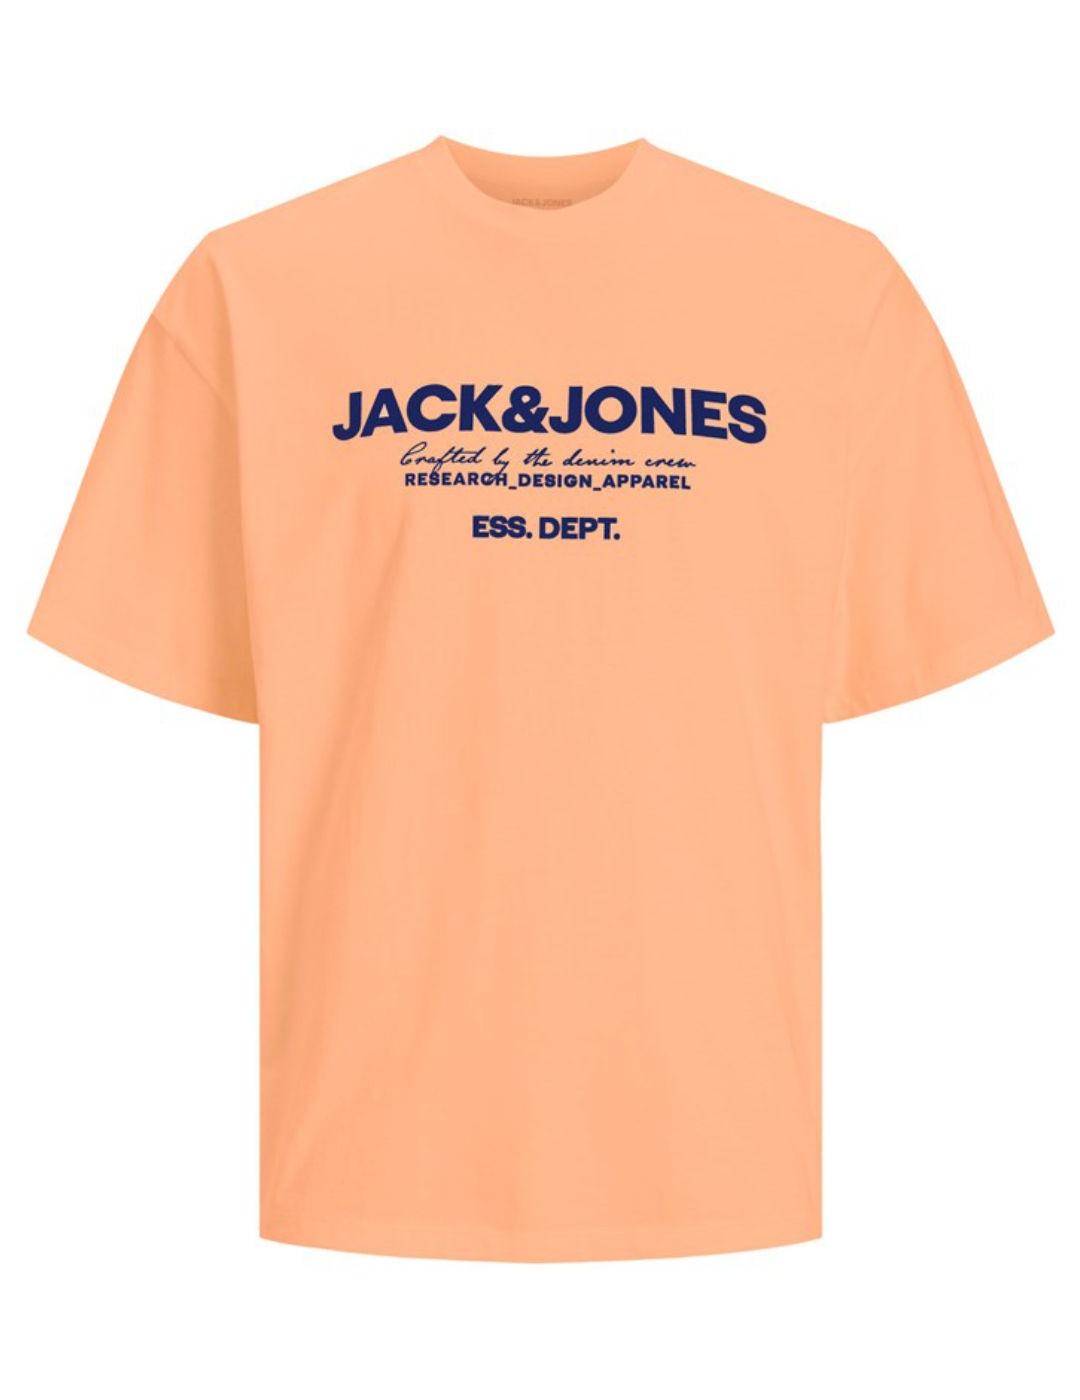 Camiseta Jack&Jones Ale naranja manga corta para hombre